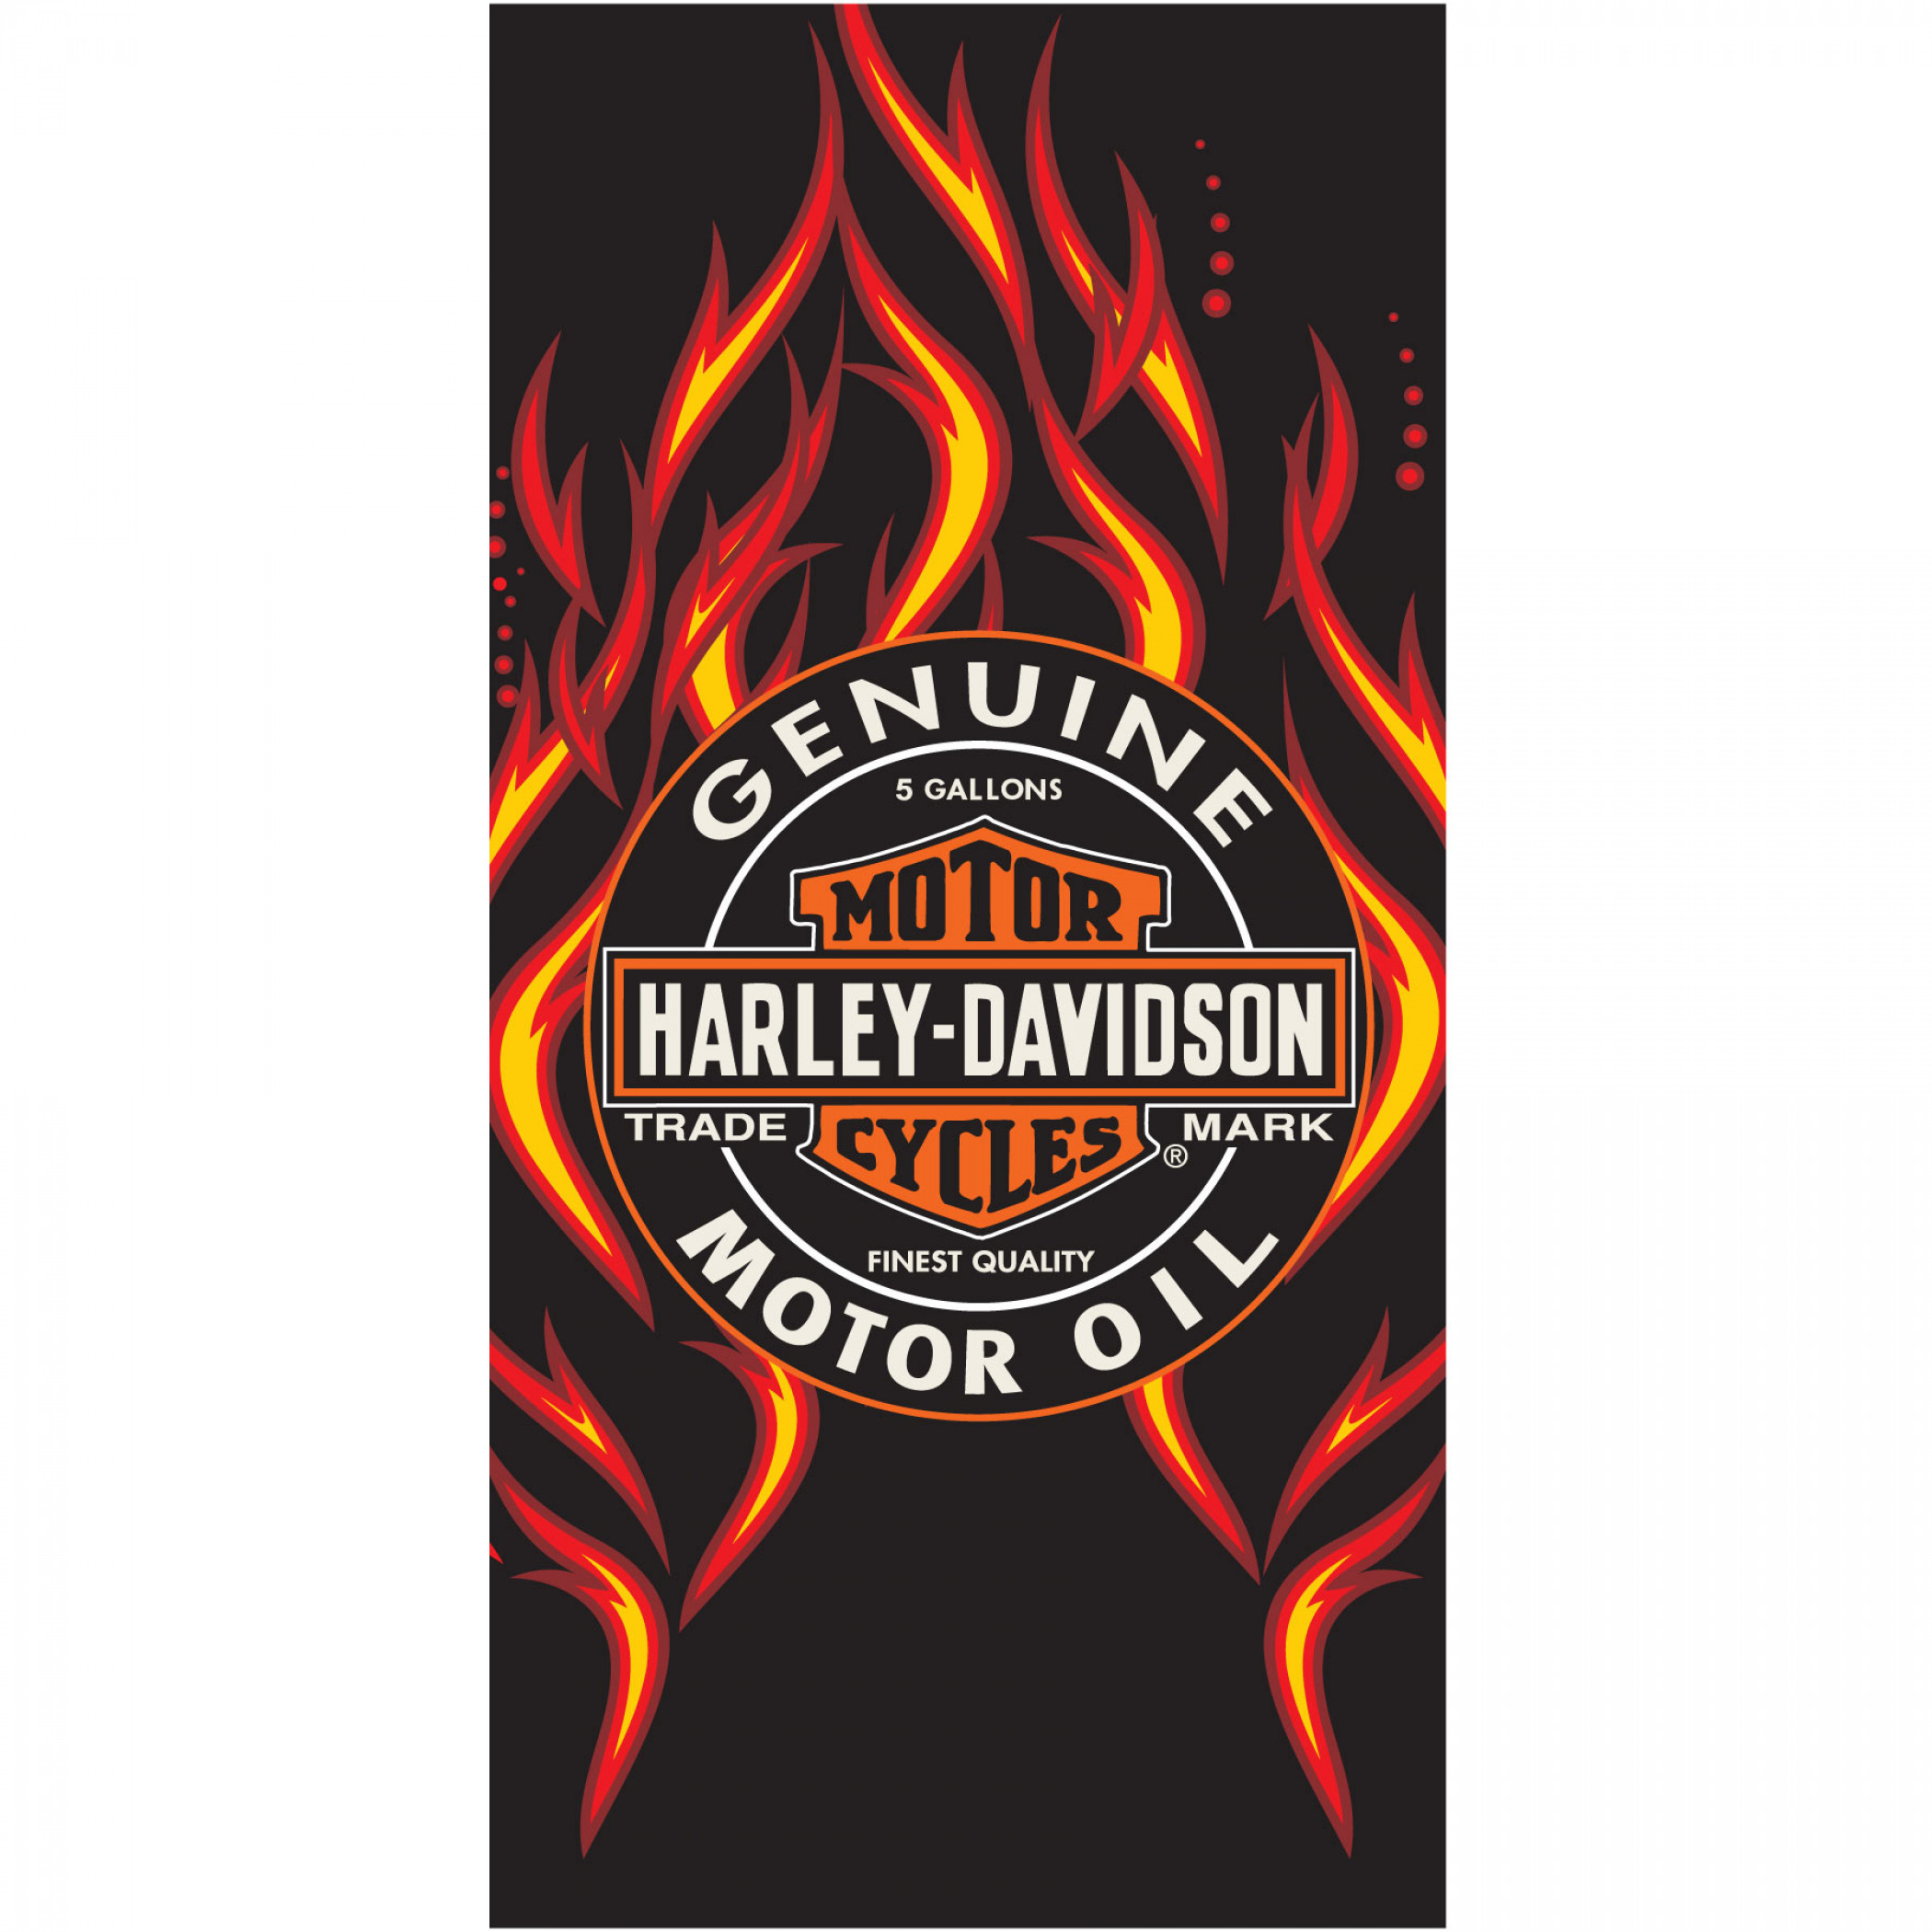 Harley Davidson Motor Oil 30x60 Towel